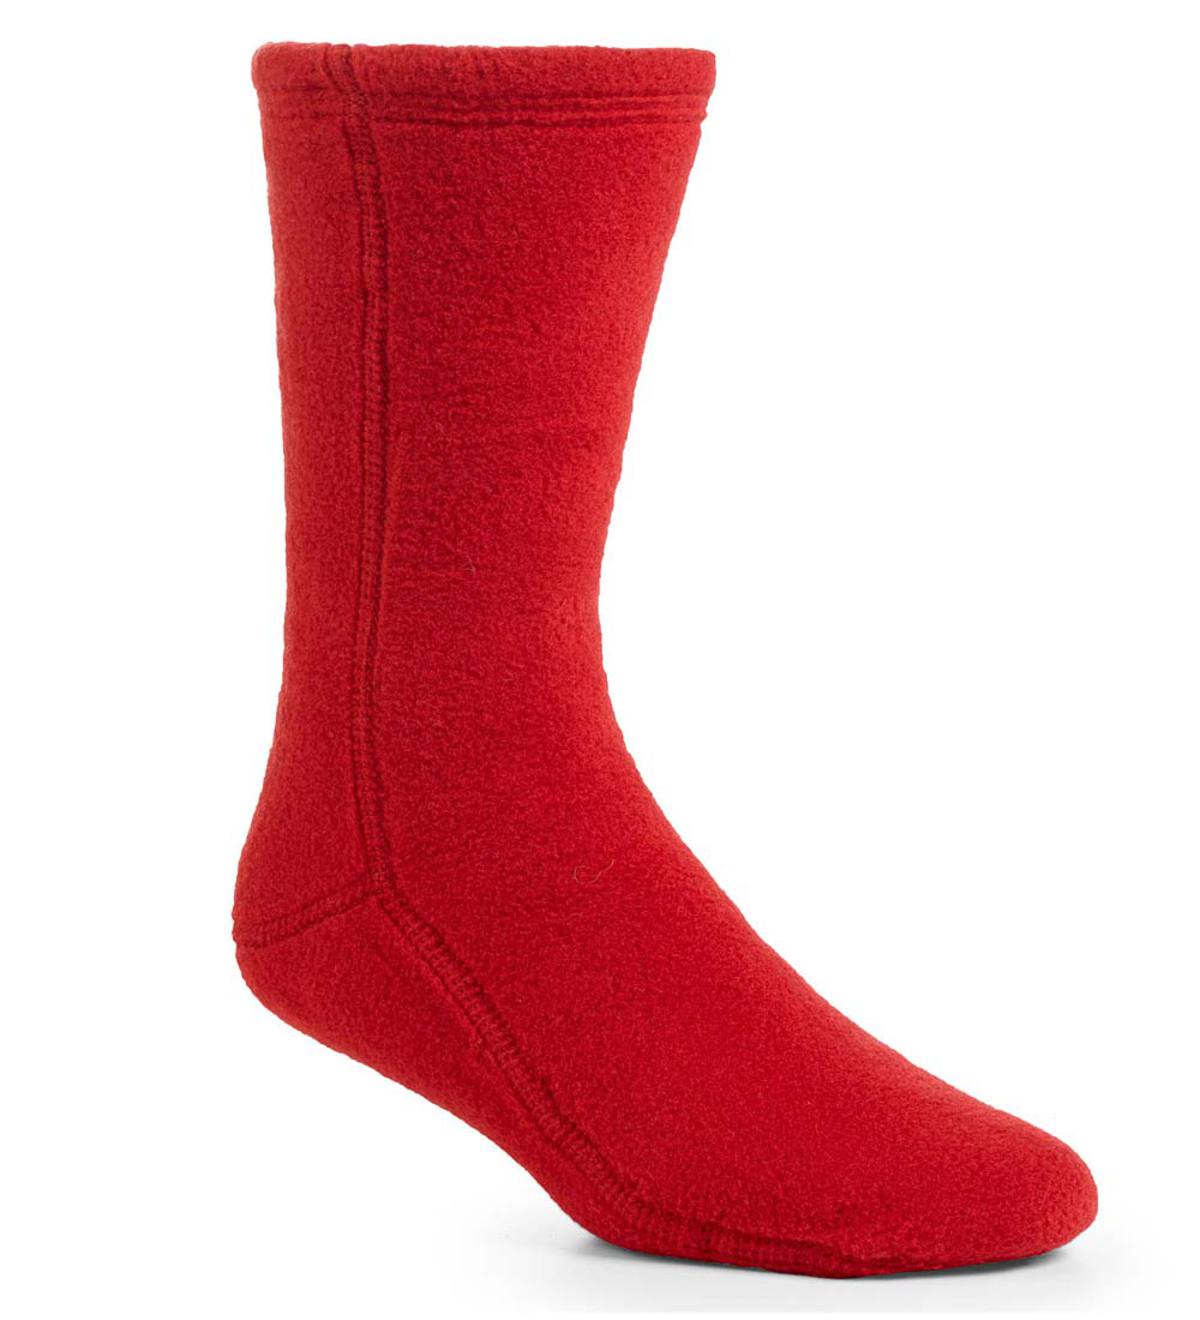 Acorn Fleece Socks in Solid Colors - Black - Large